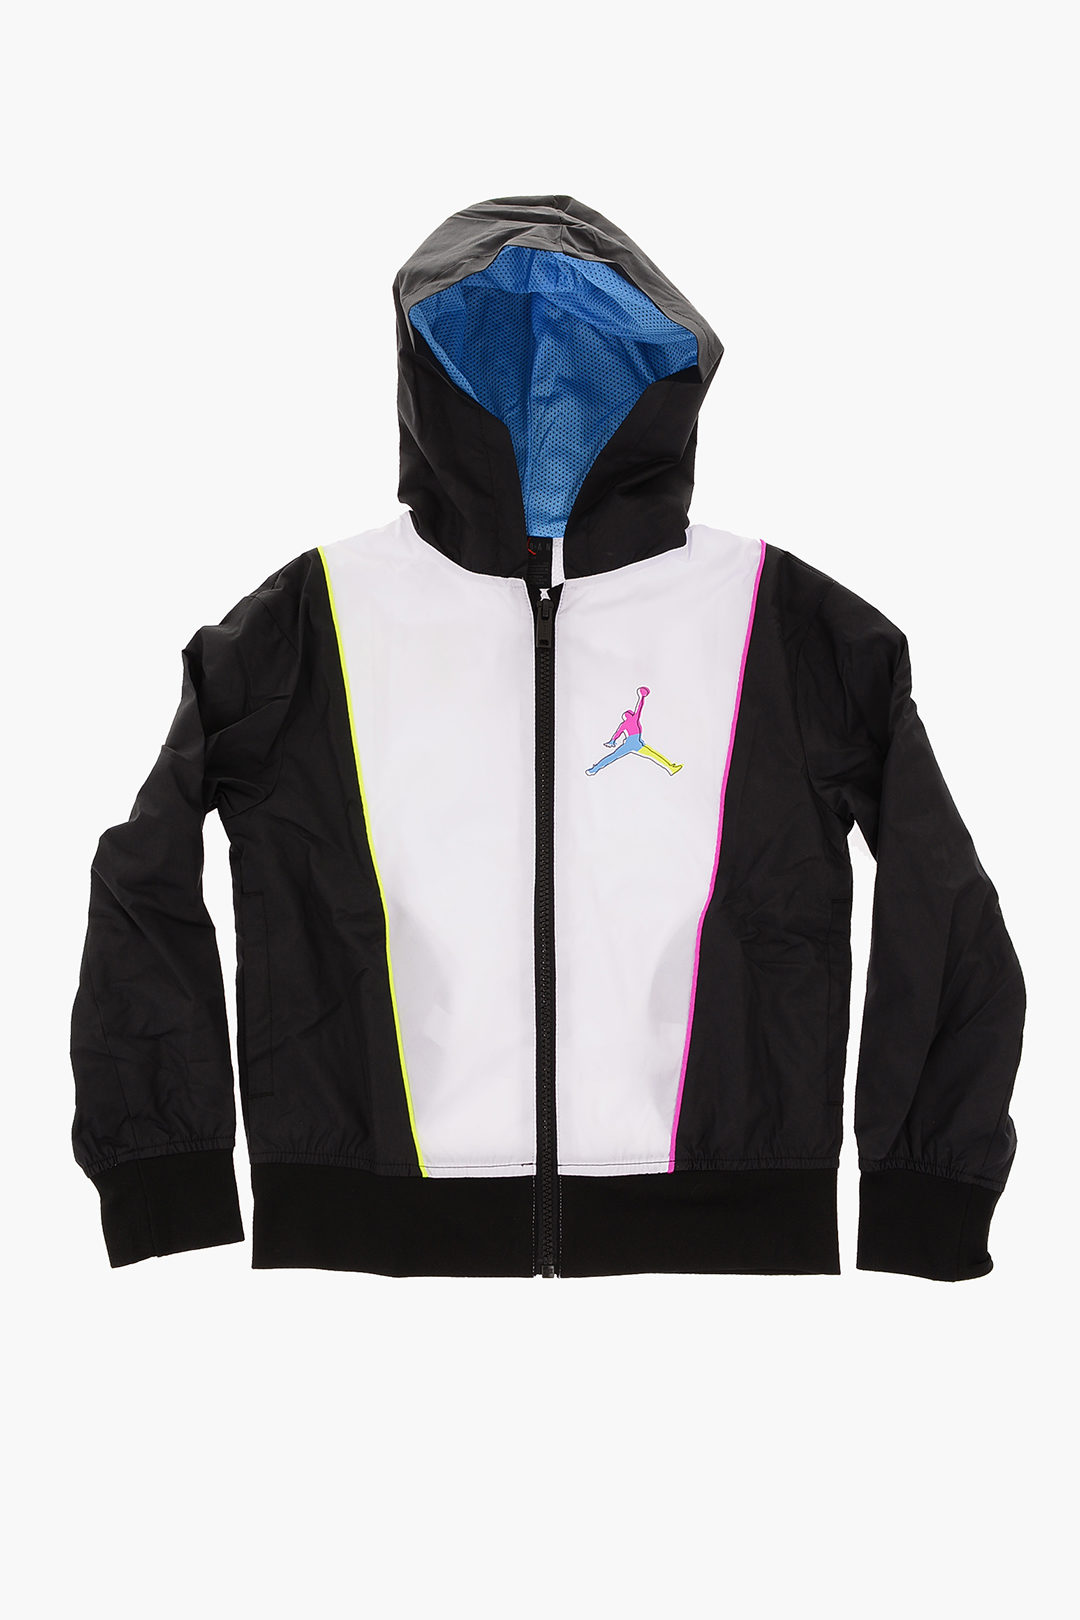 Nike KIDS AIR JORDAN Printed Hooded Jacket girls - Glamood Outlet